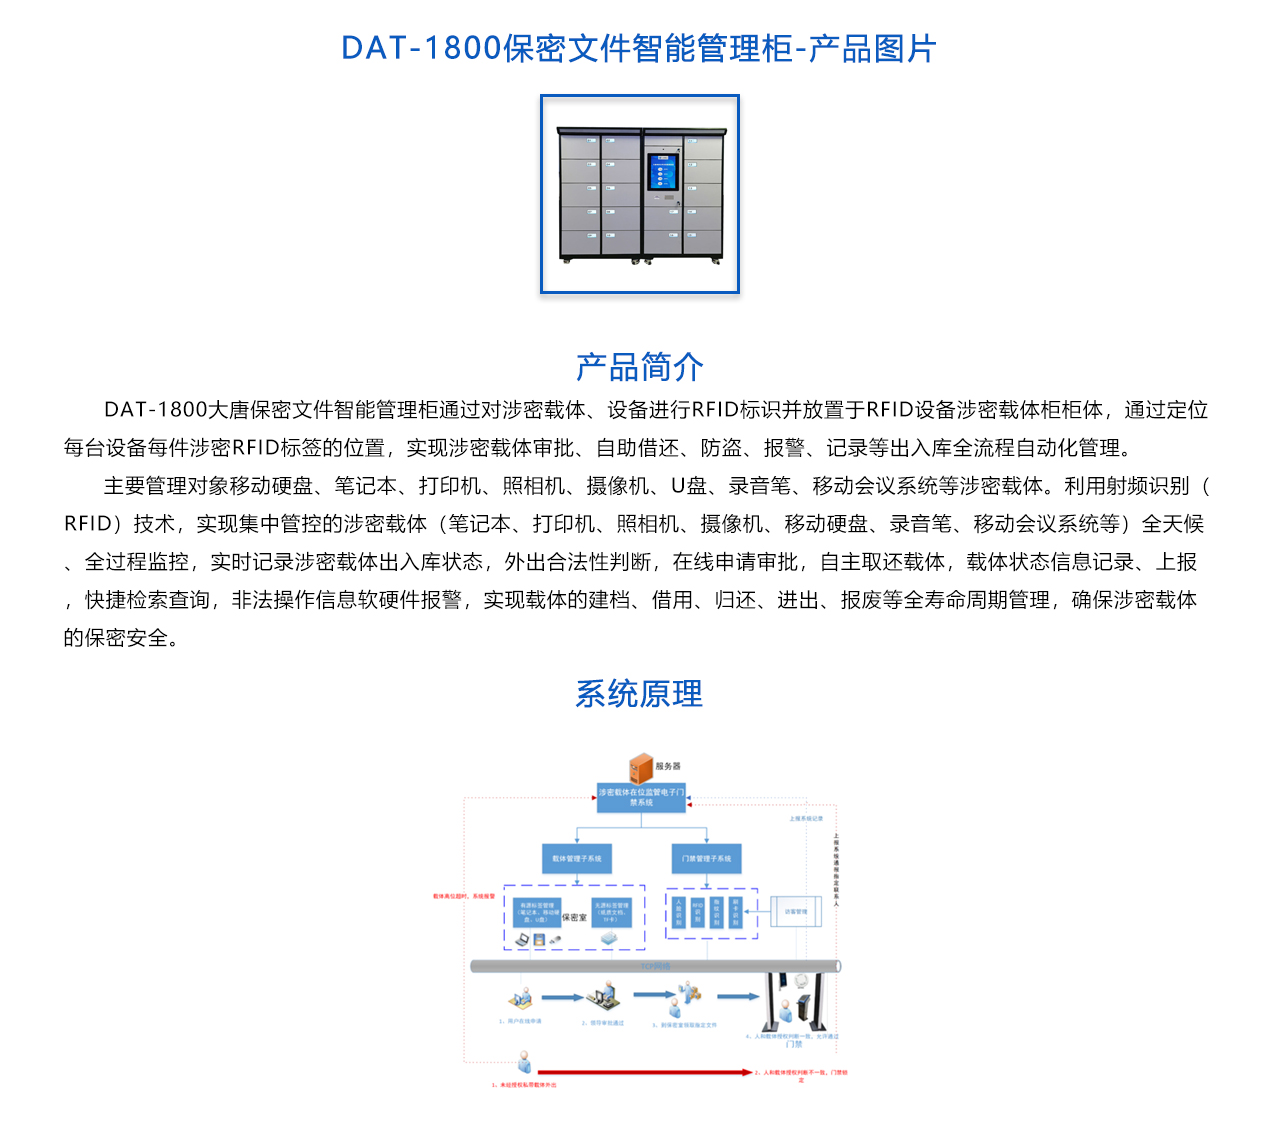 DAT-1800保密文件智能管理柜-概述.jpg